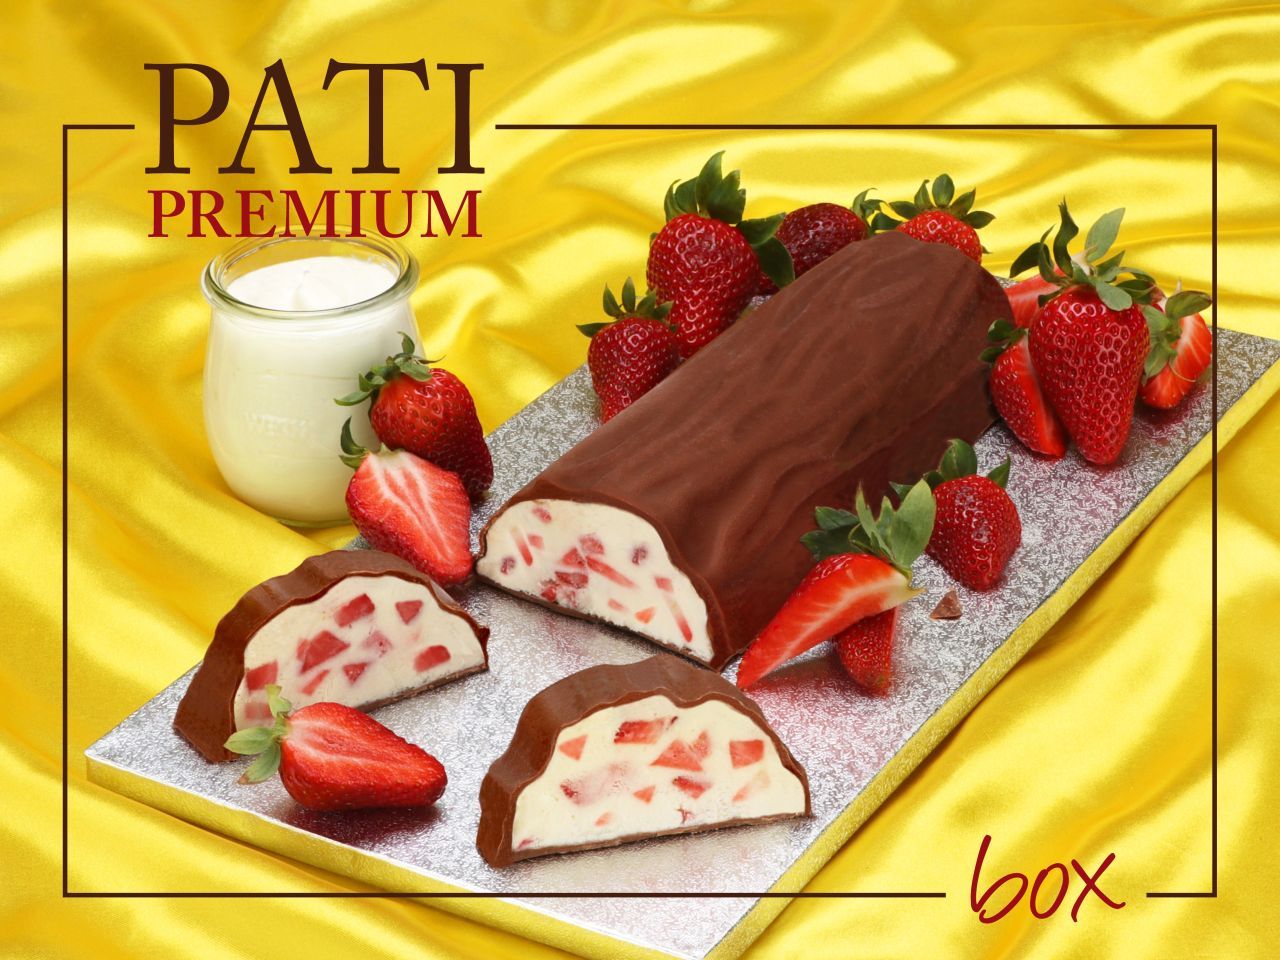 PATI-PREMIUM-BOX - Halbjahresabo von Pati-Versand